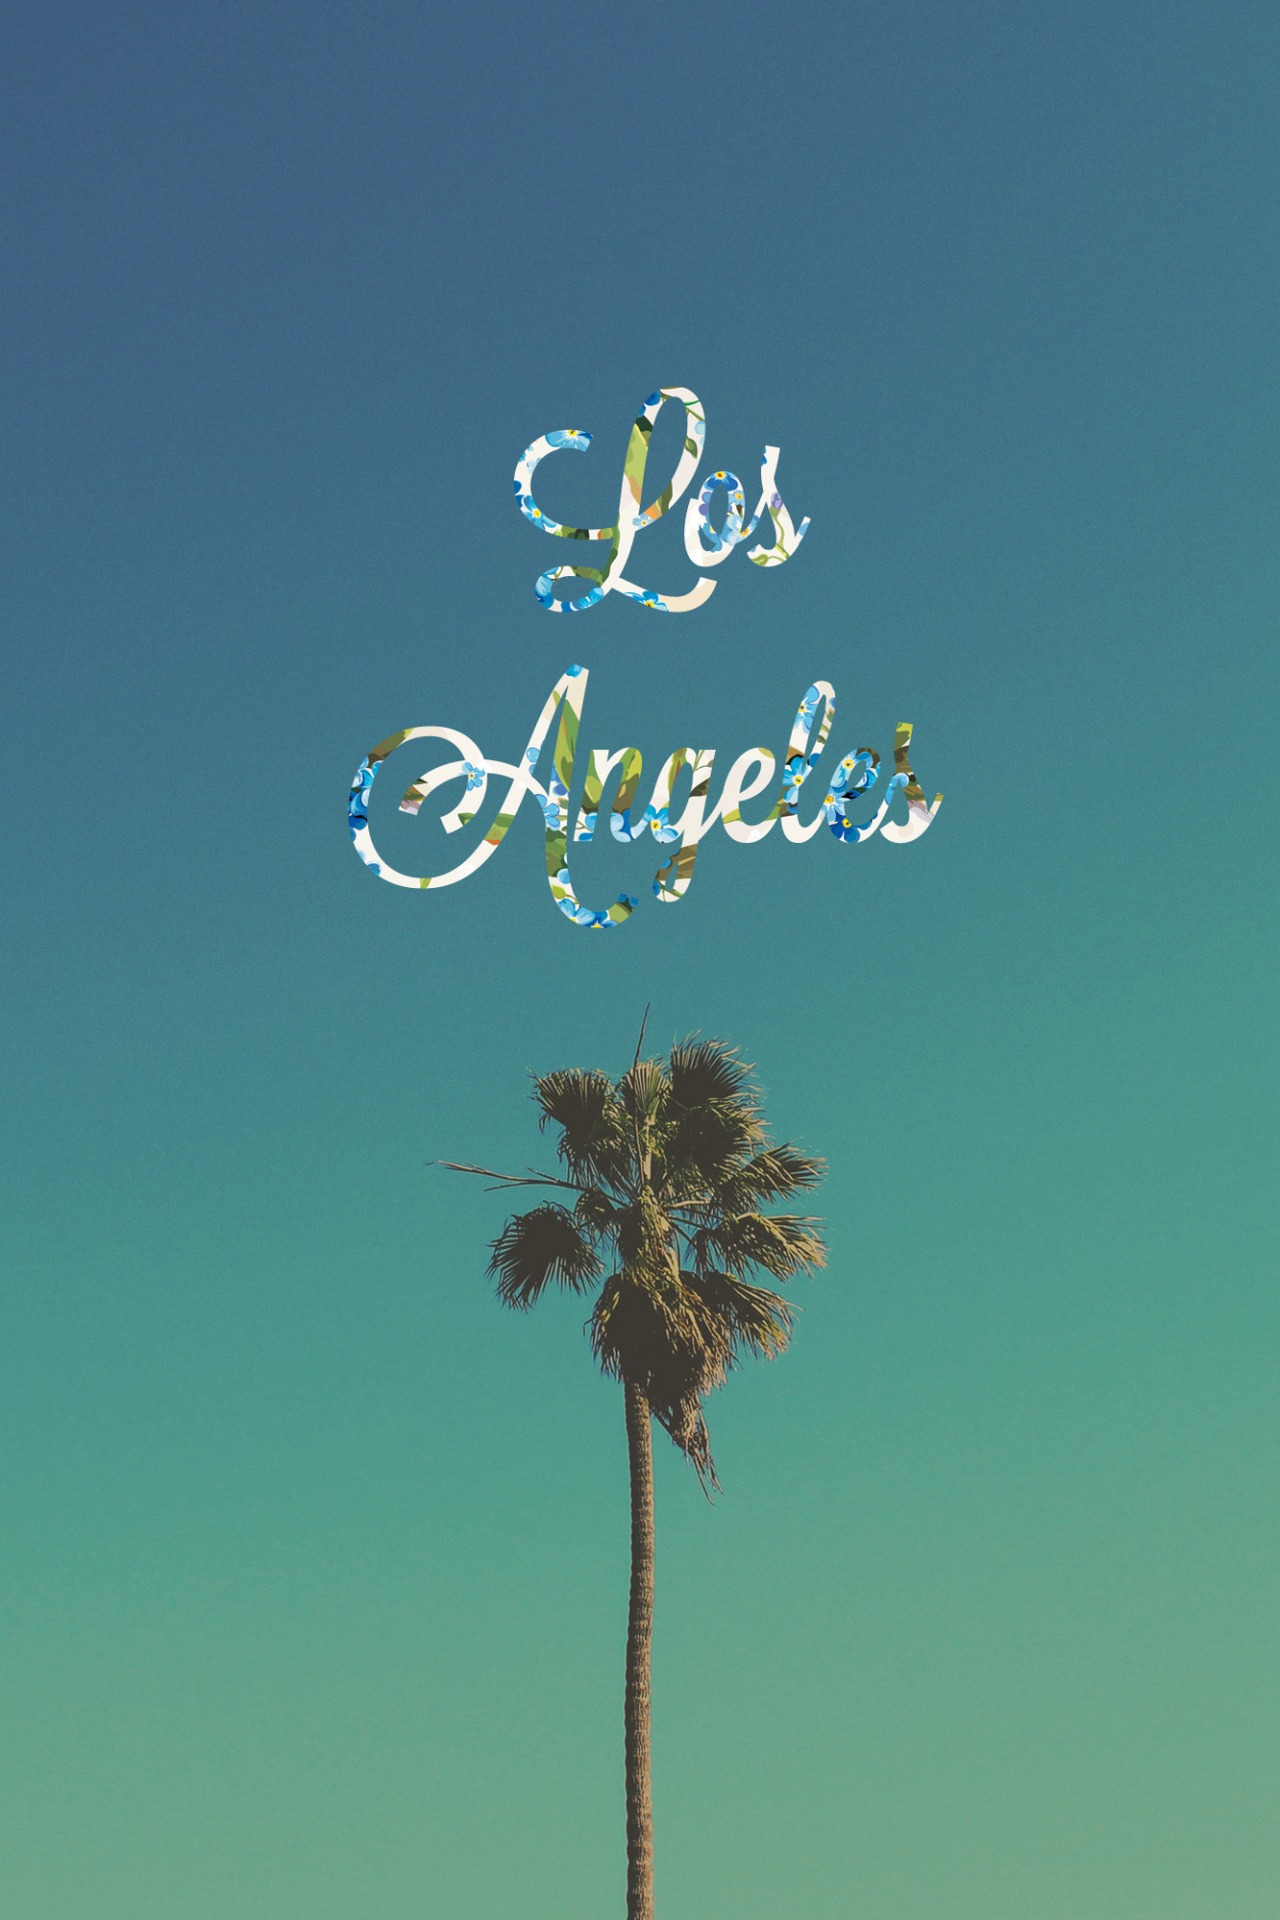 Los Angeles City Of Angels - Los Angeles California Vertical - HD Wallpaper 